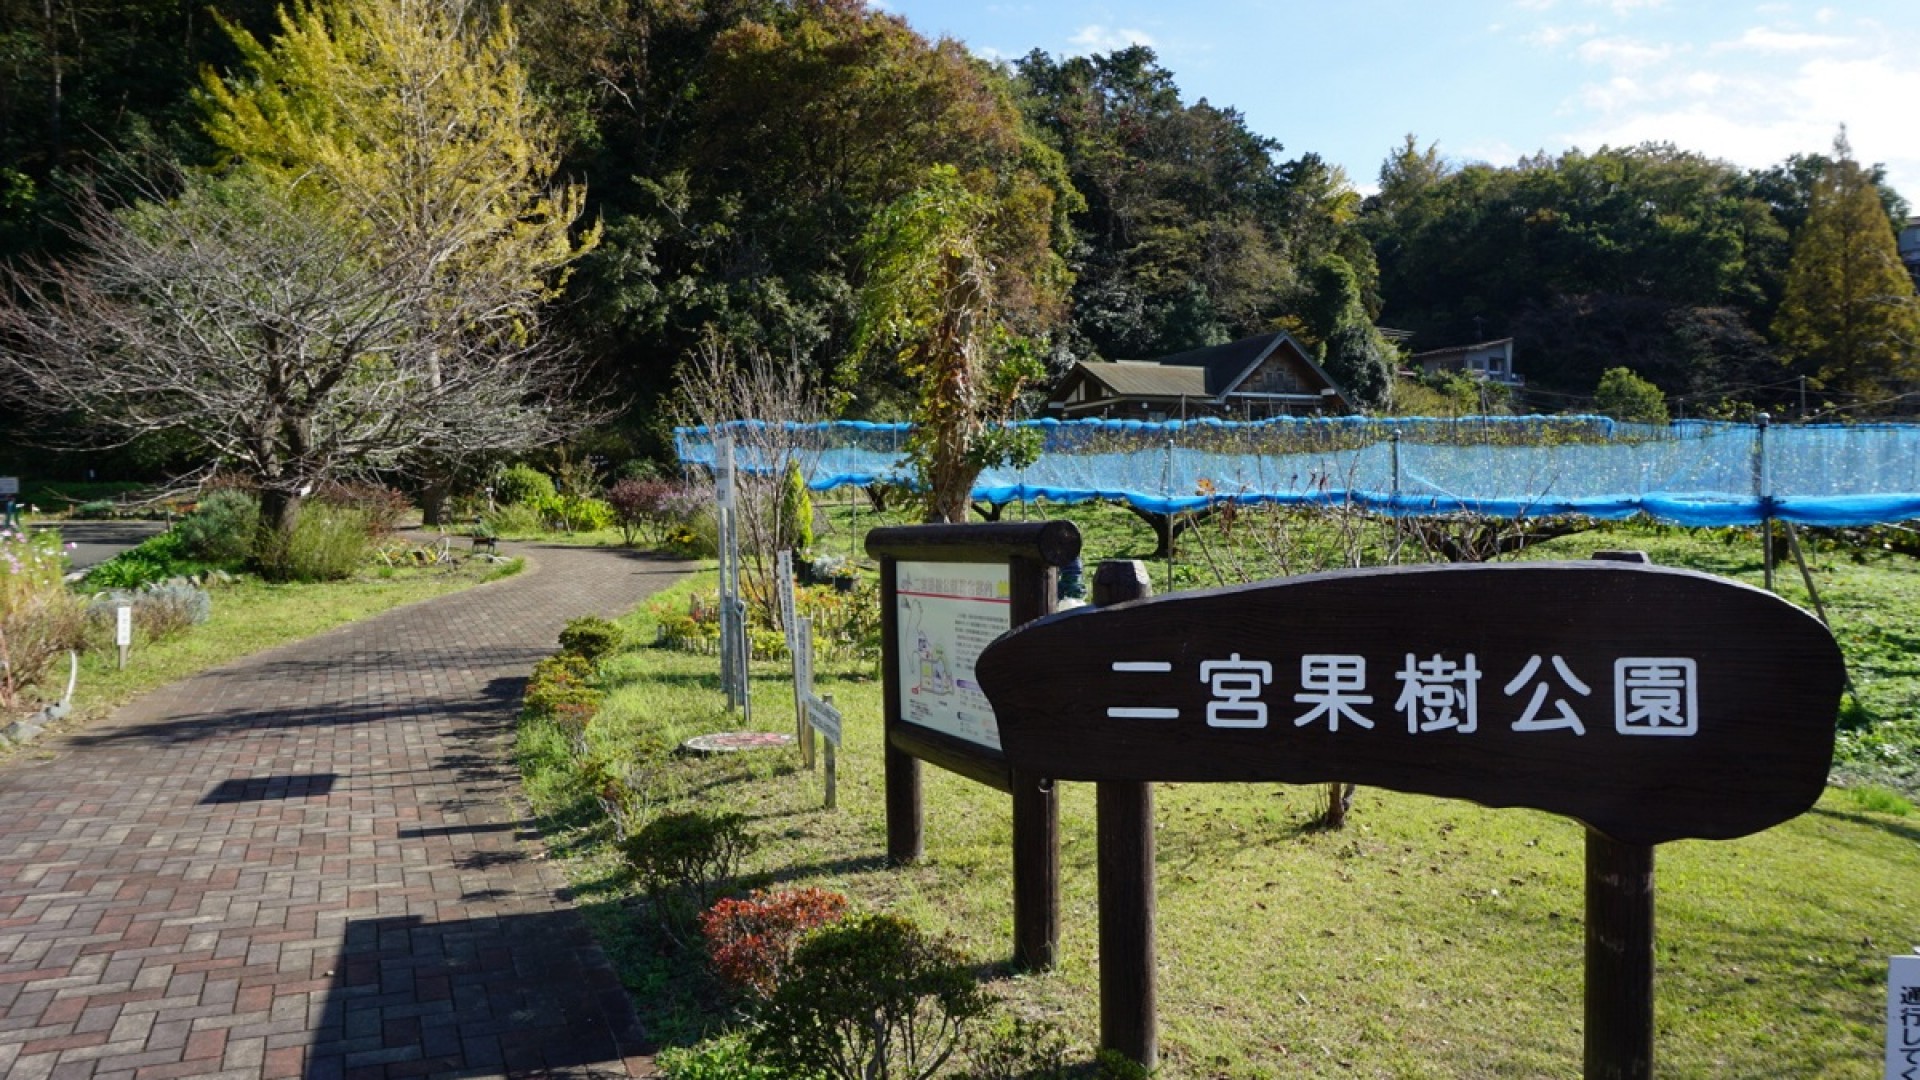 Ninomiya Orchard Park